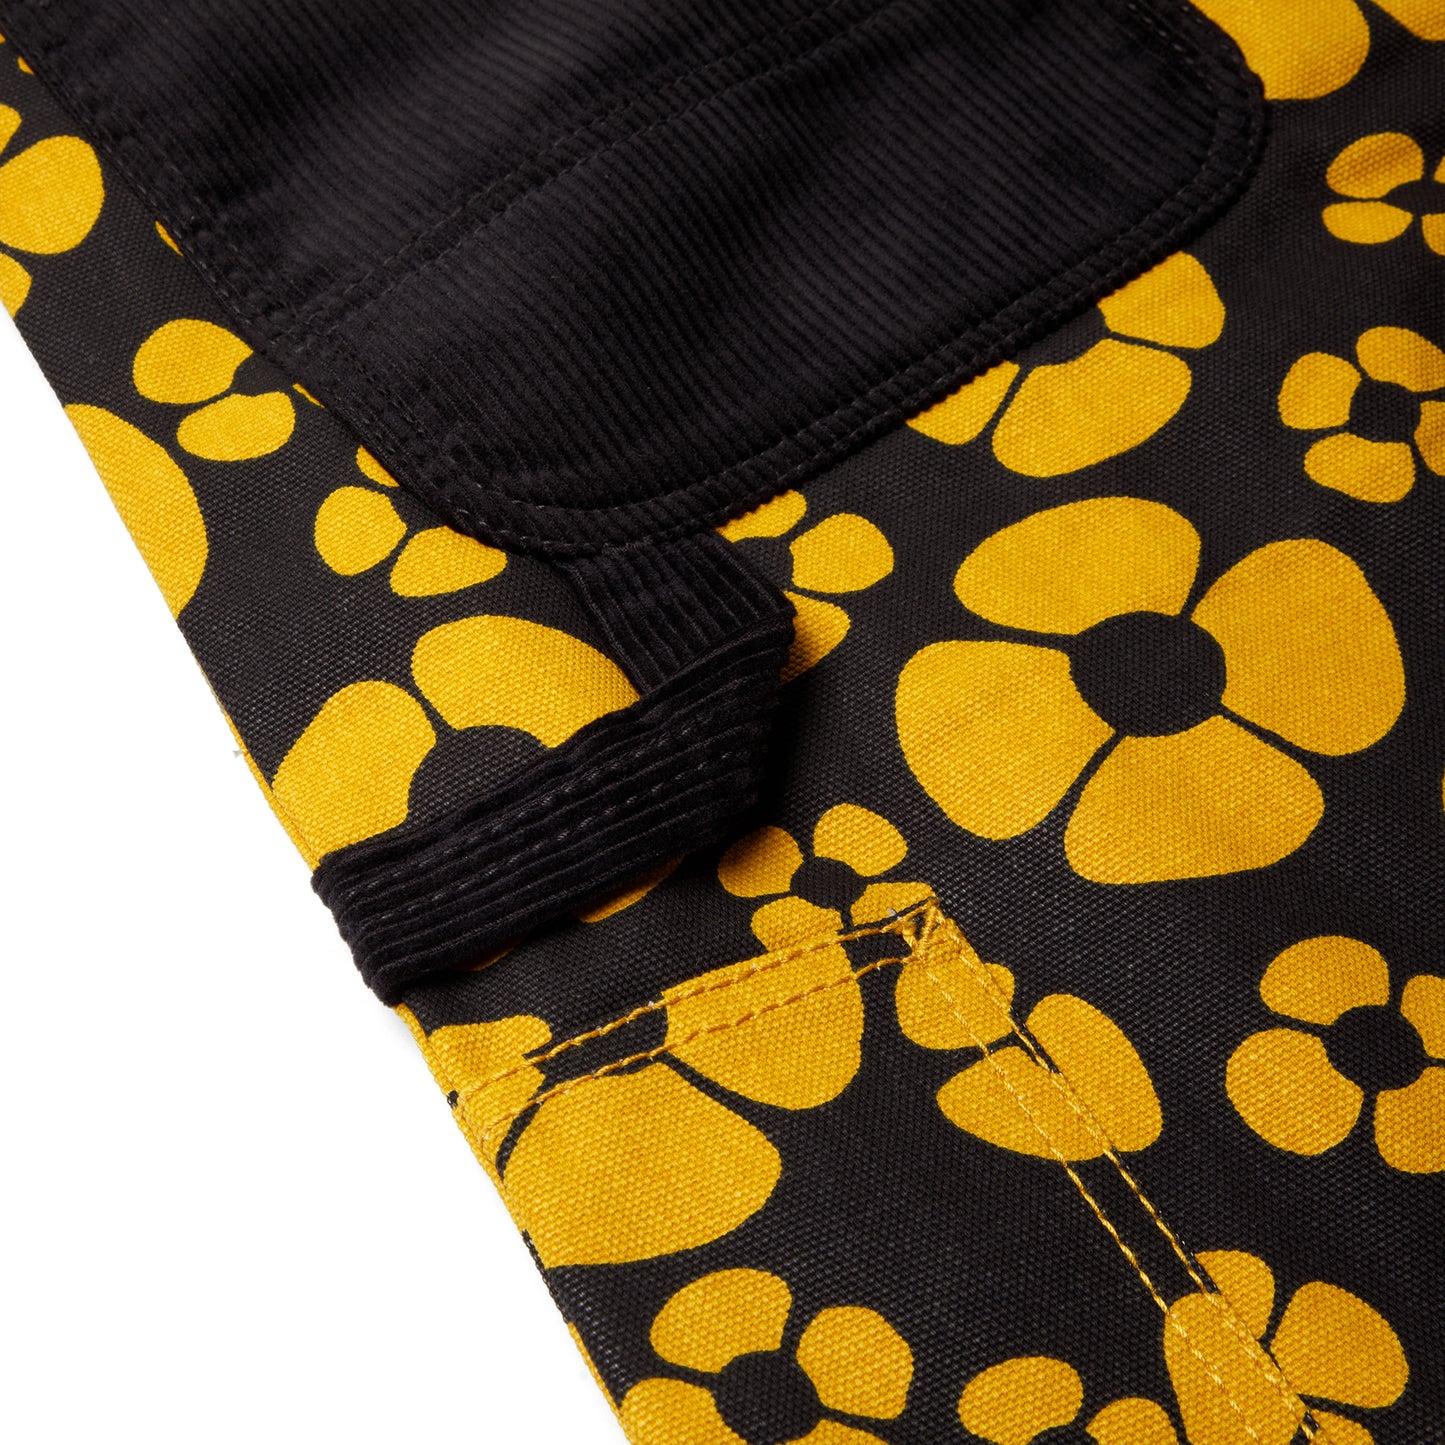 MARNI x Carhartt Clover Printed Canvas Pants (Sunflower)